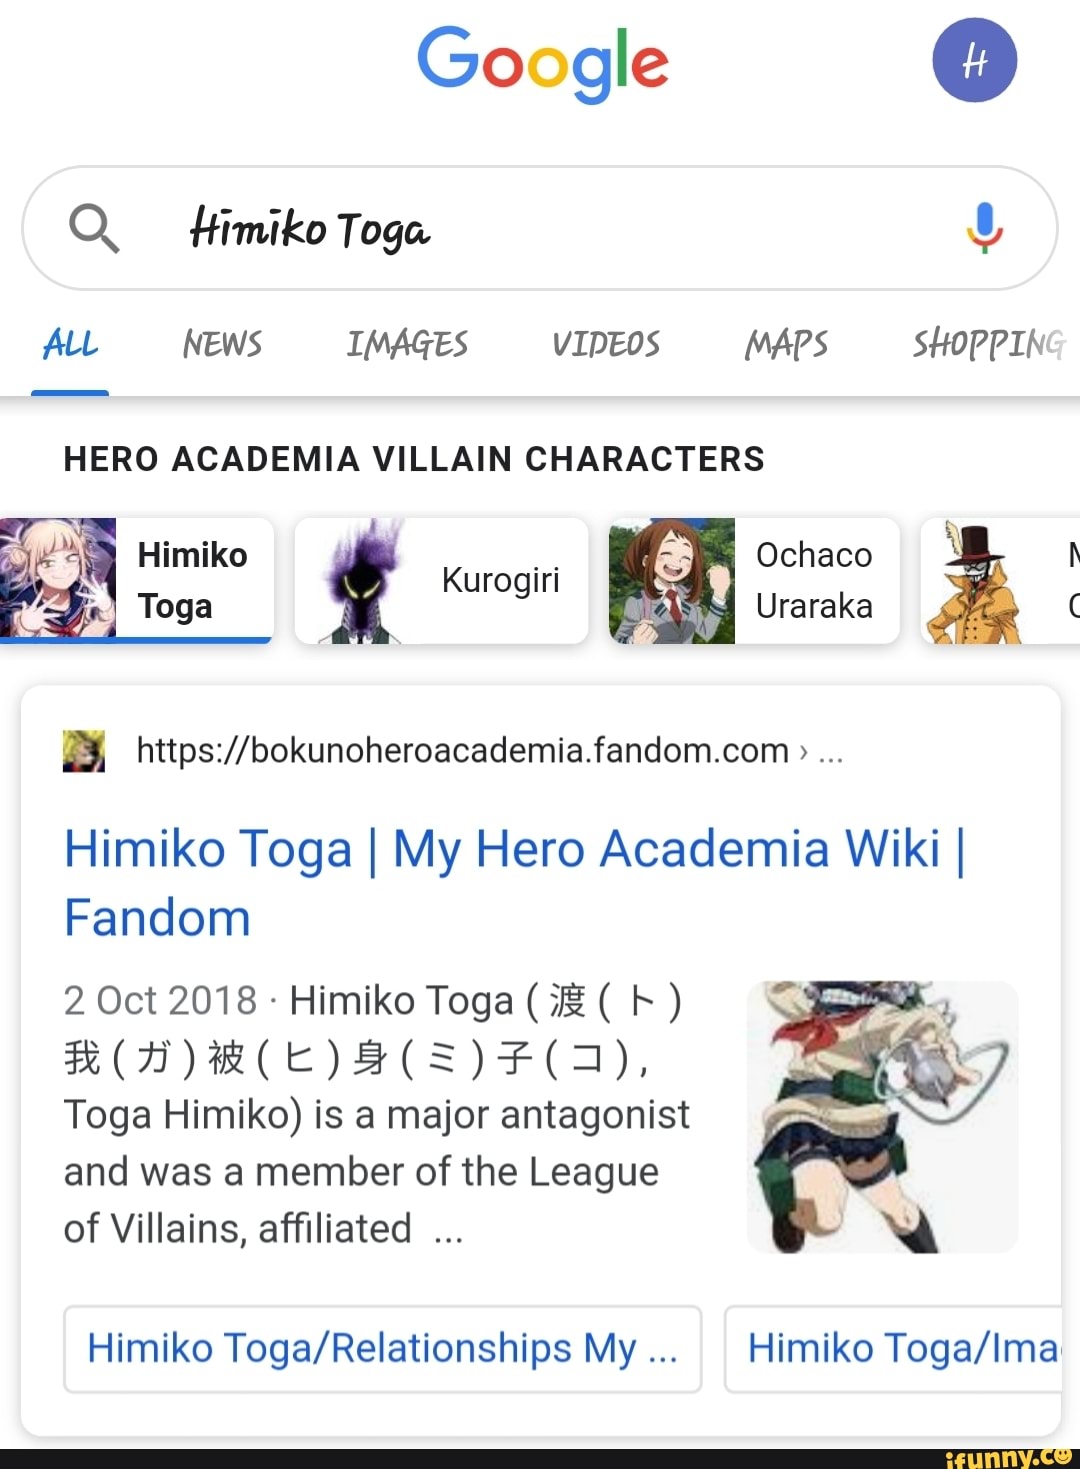 List of Characters, My Hero Academia Wiki